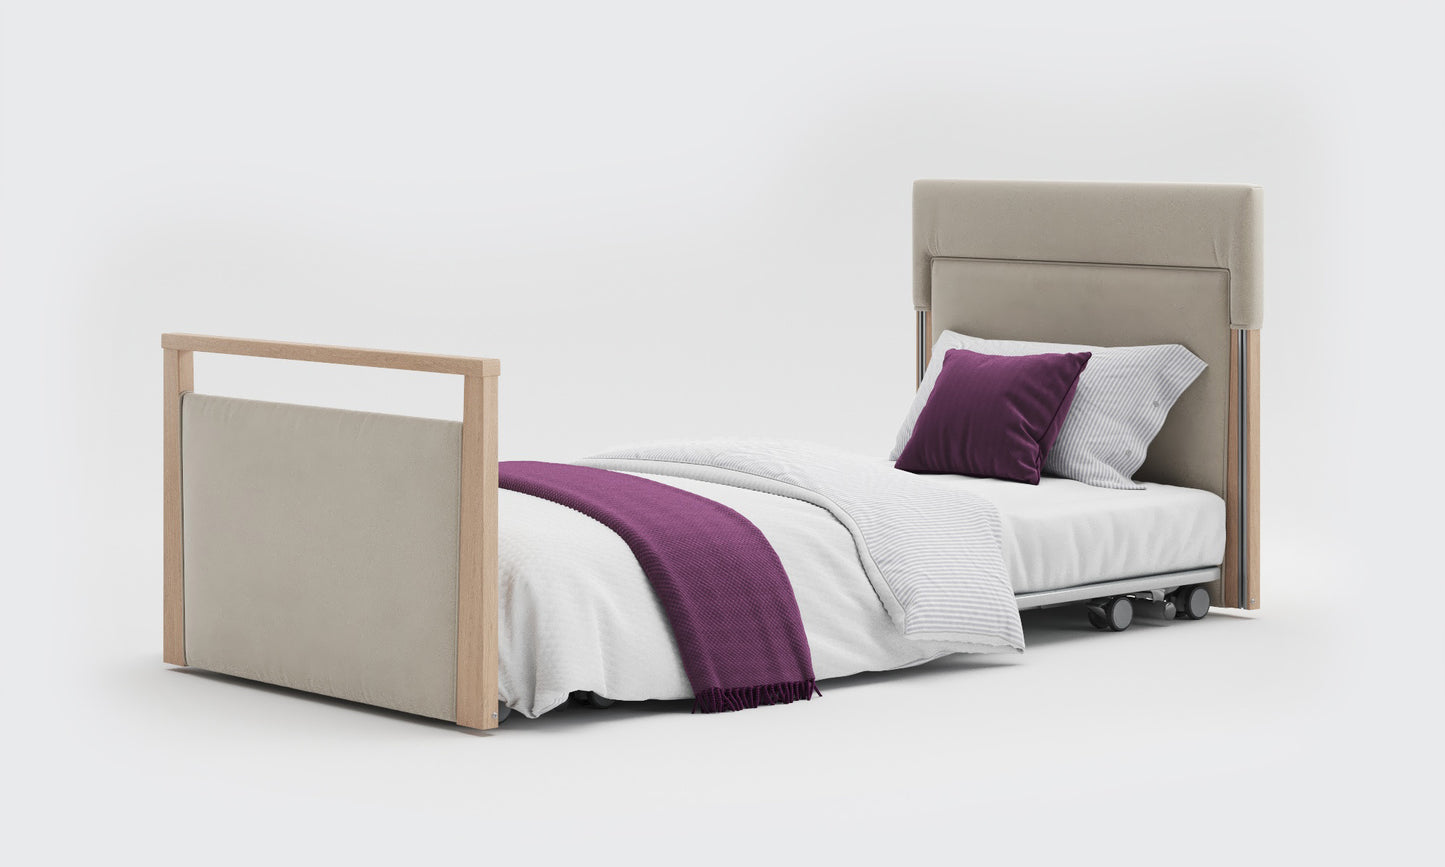 Solo SafeSide Upholstered Profiling Floor Bed